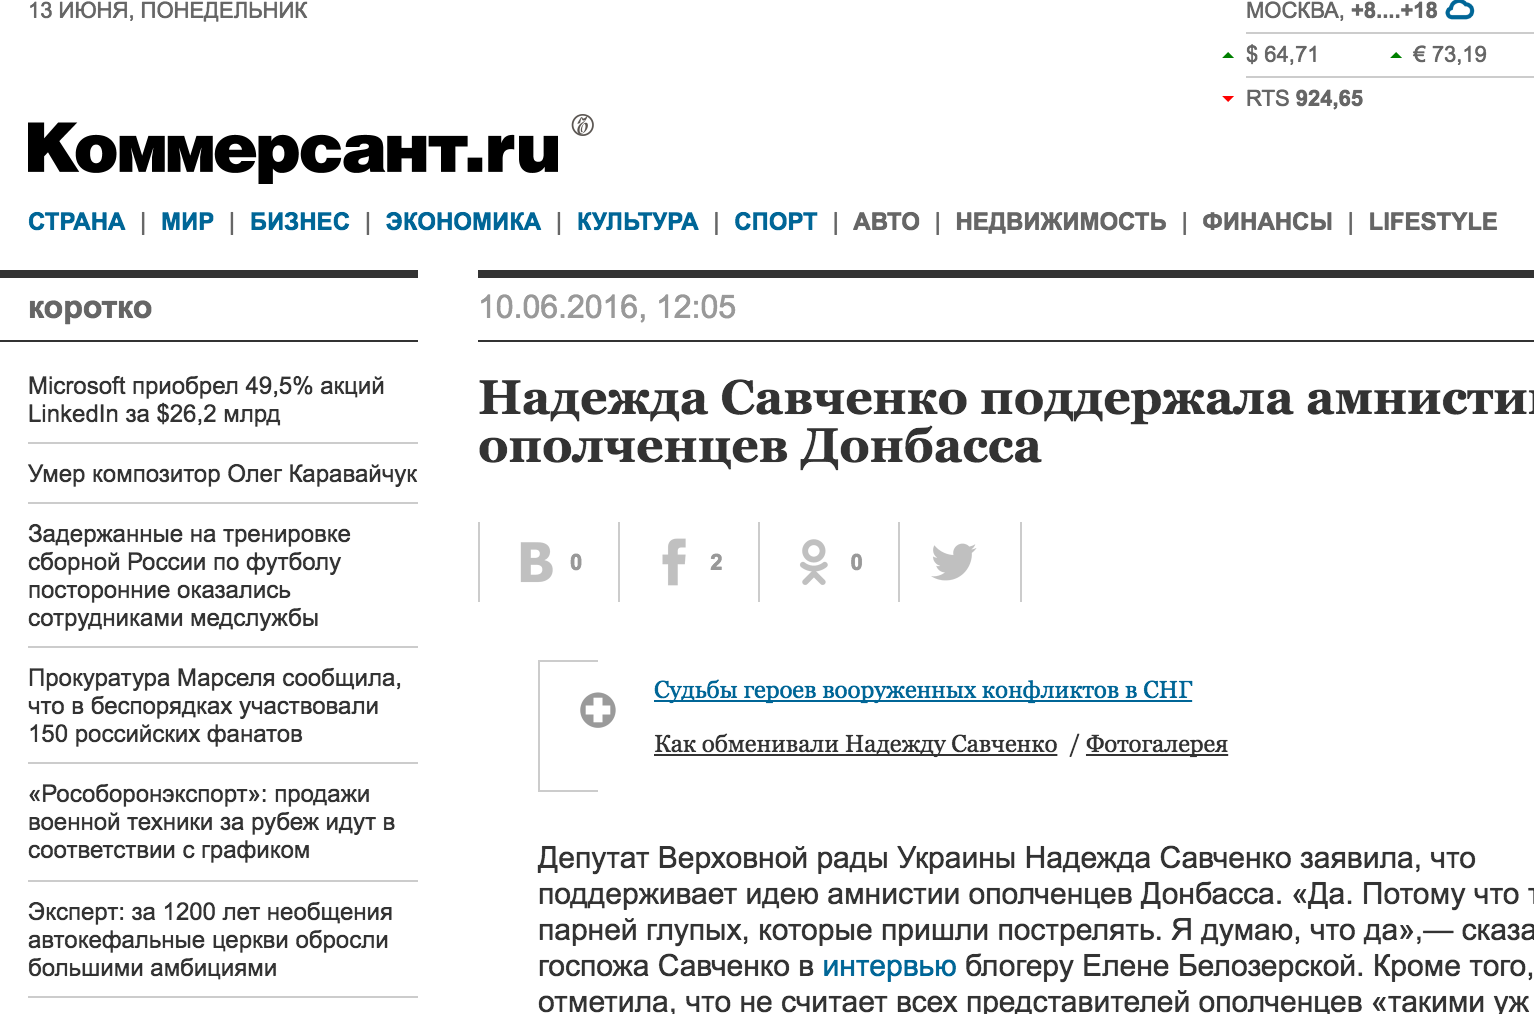 Website screenshot Kommersant